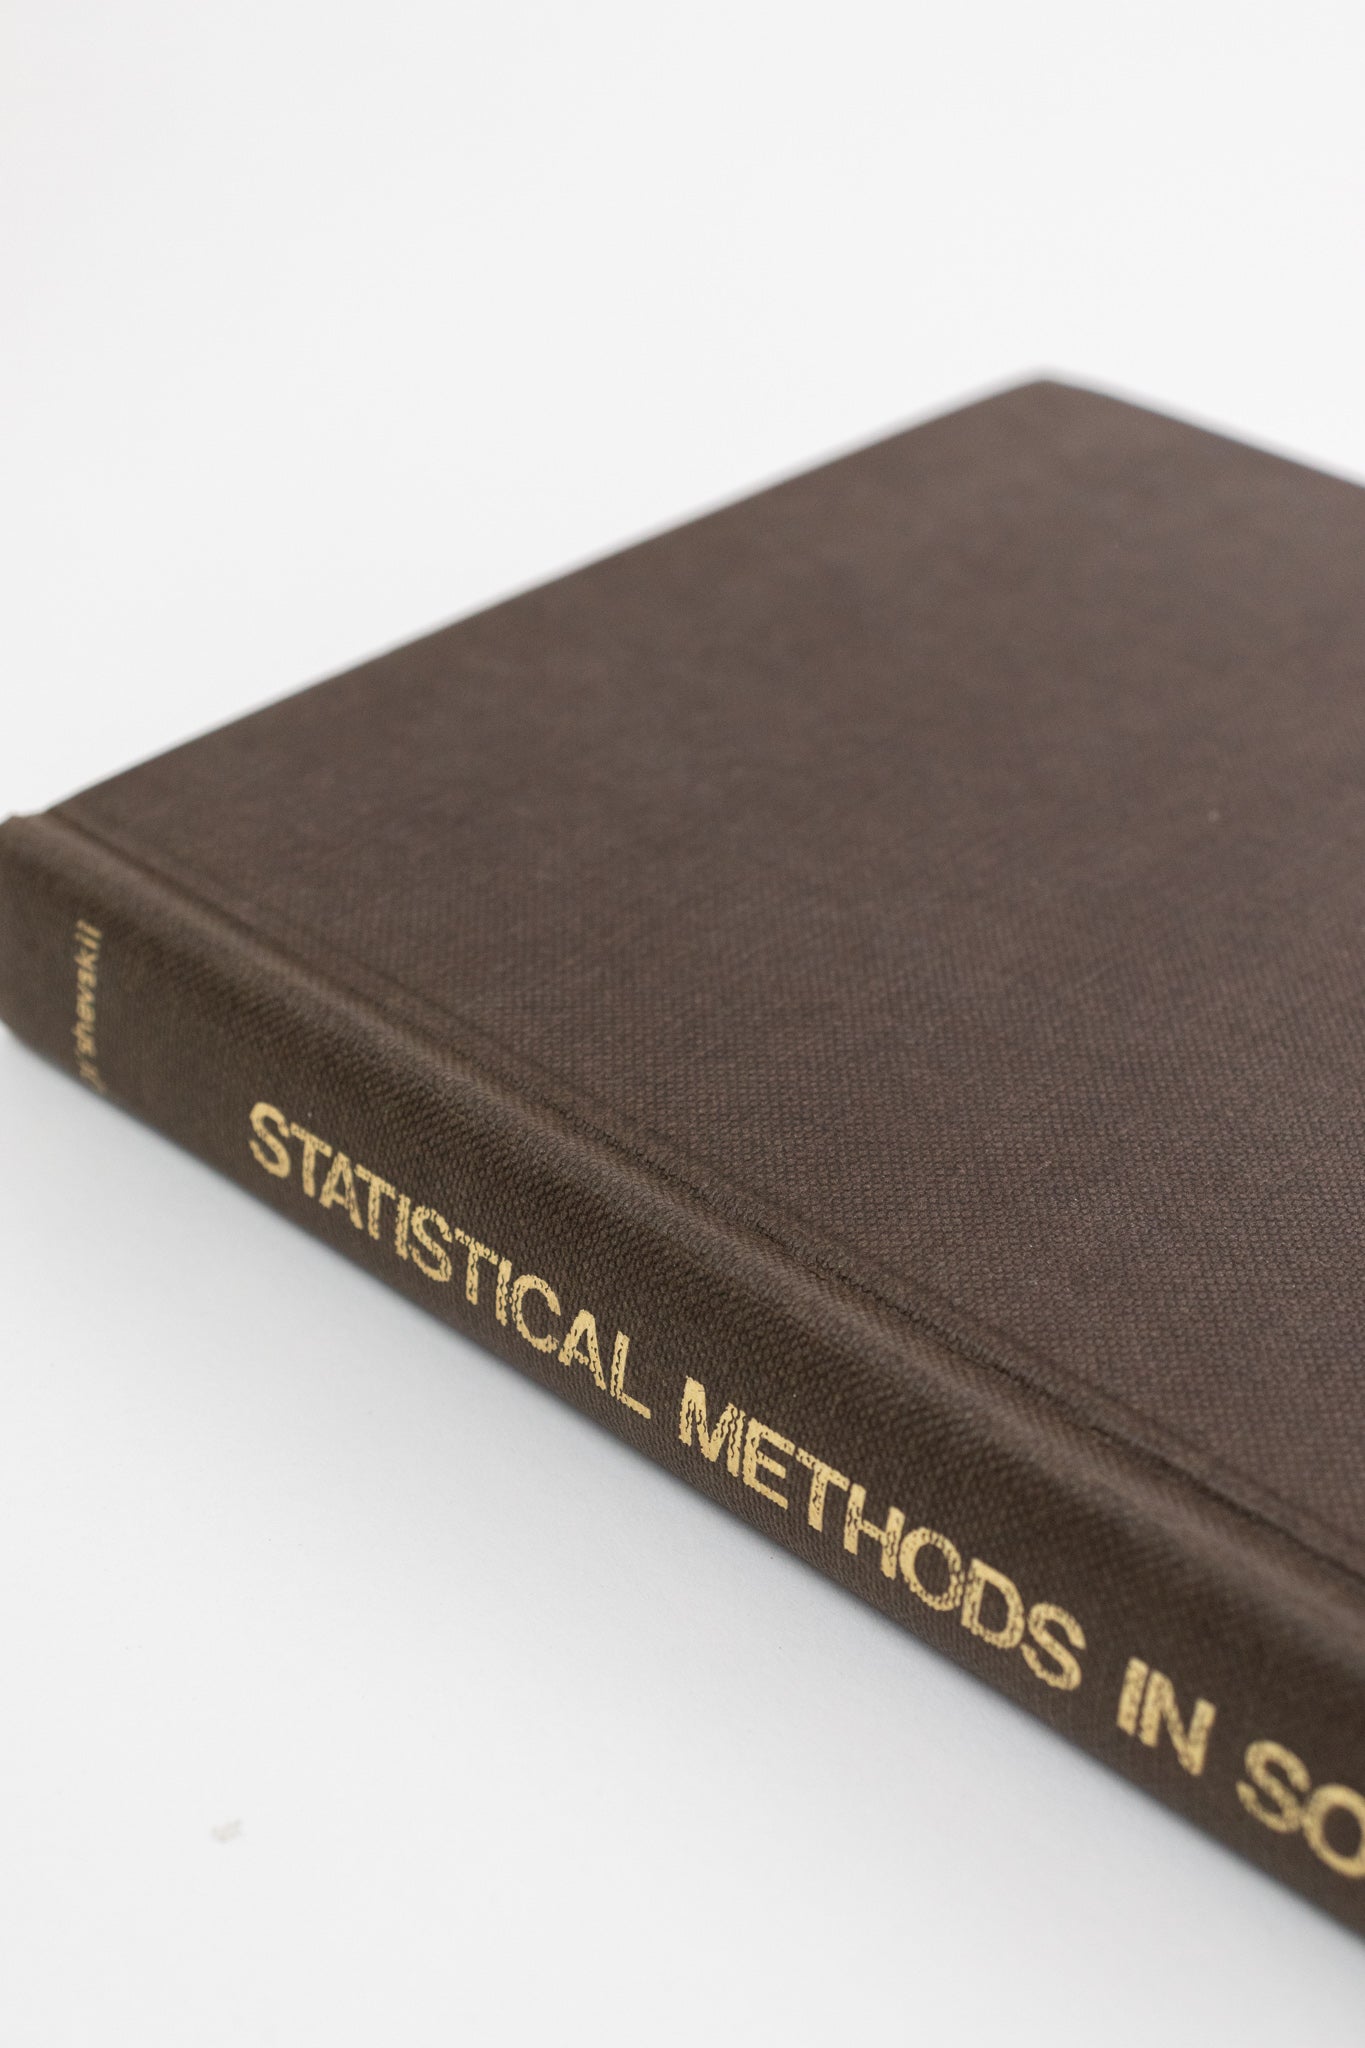 Statistical Methods in Sonar - Stemcell Science Shop